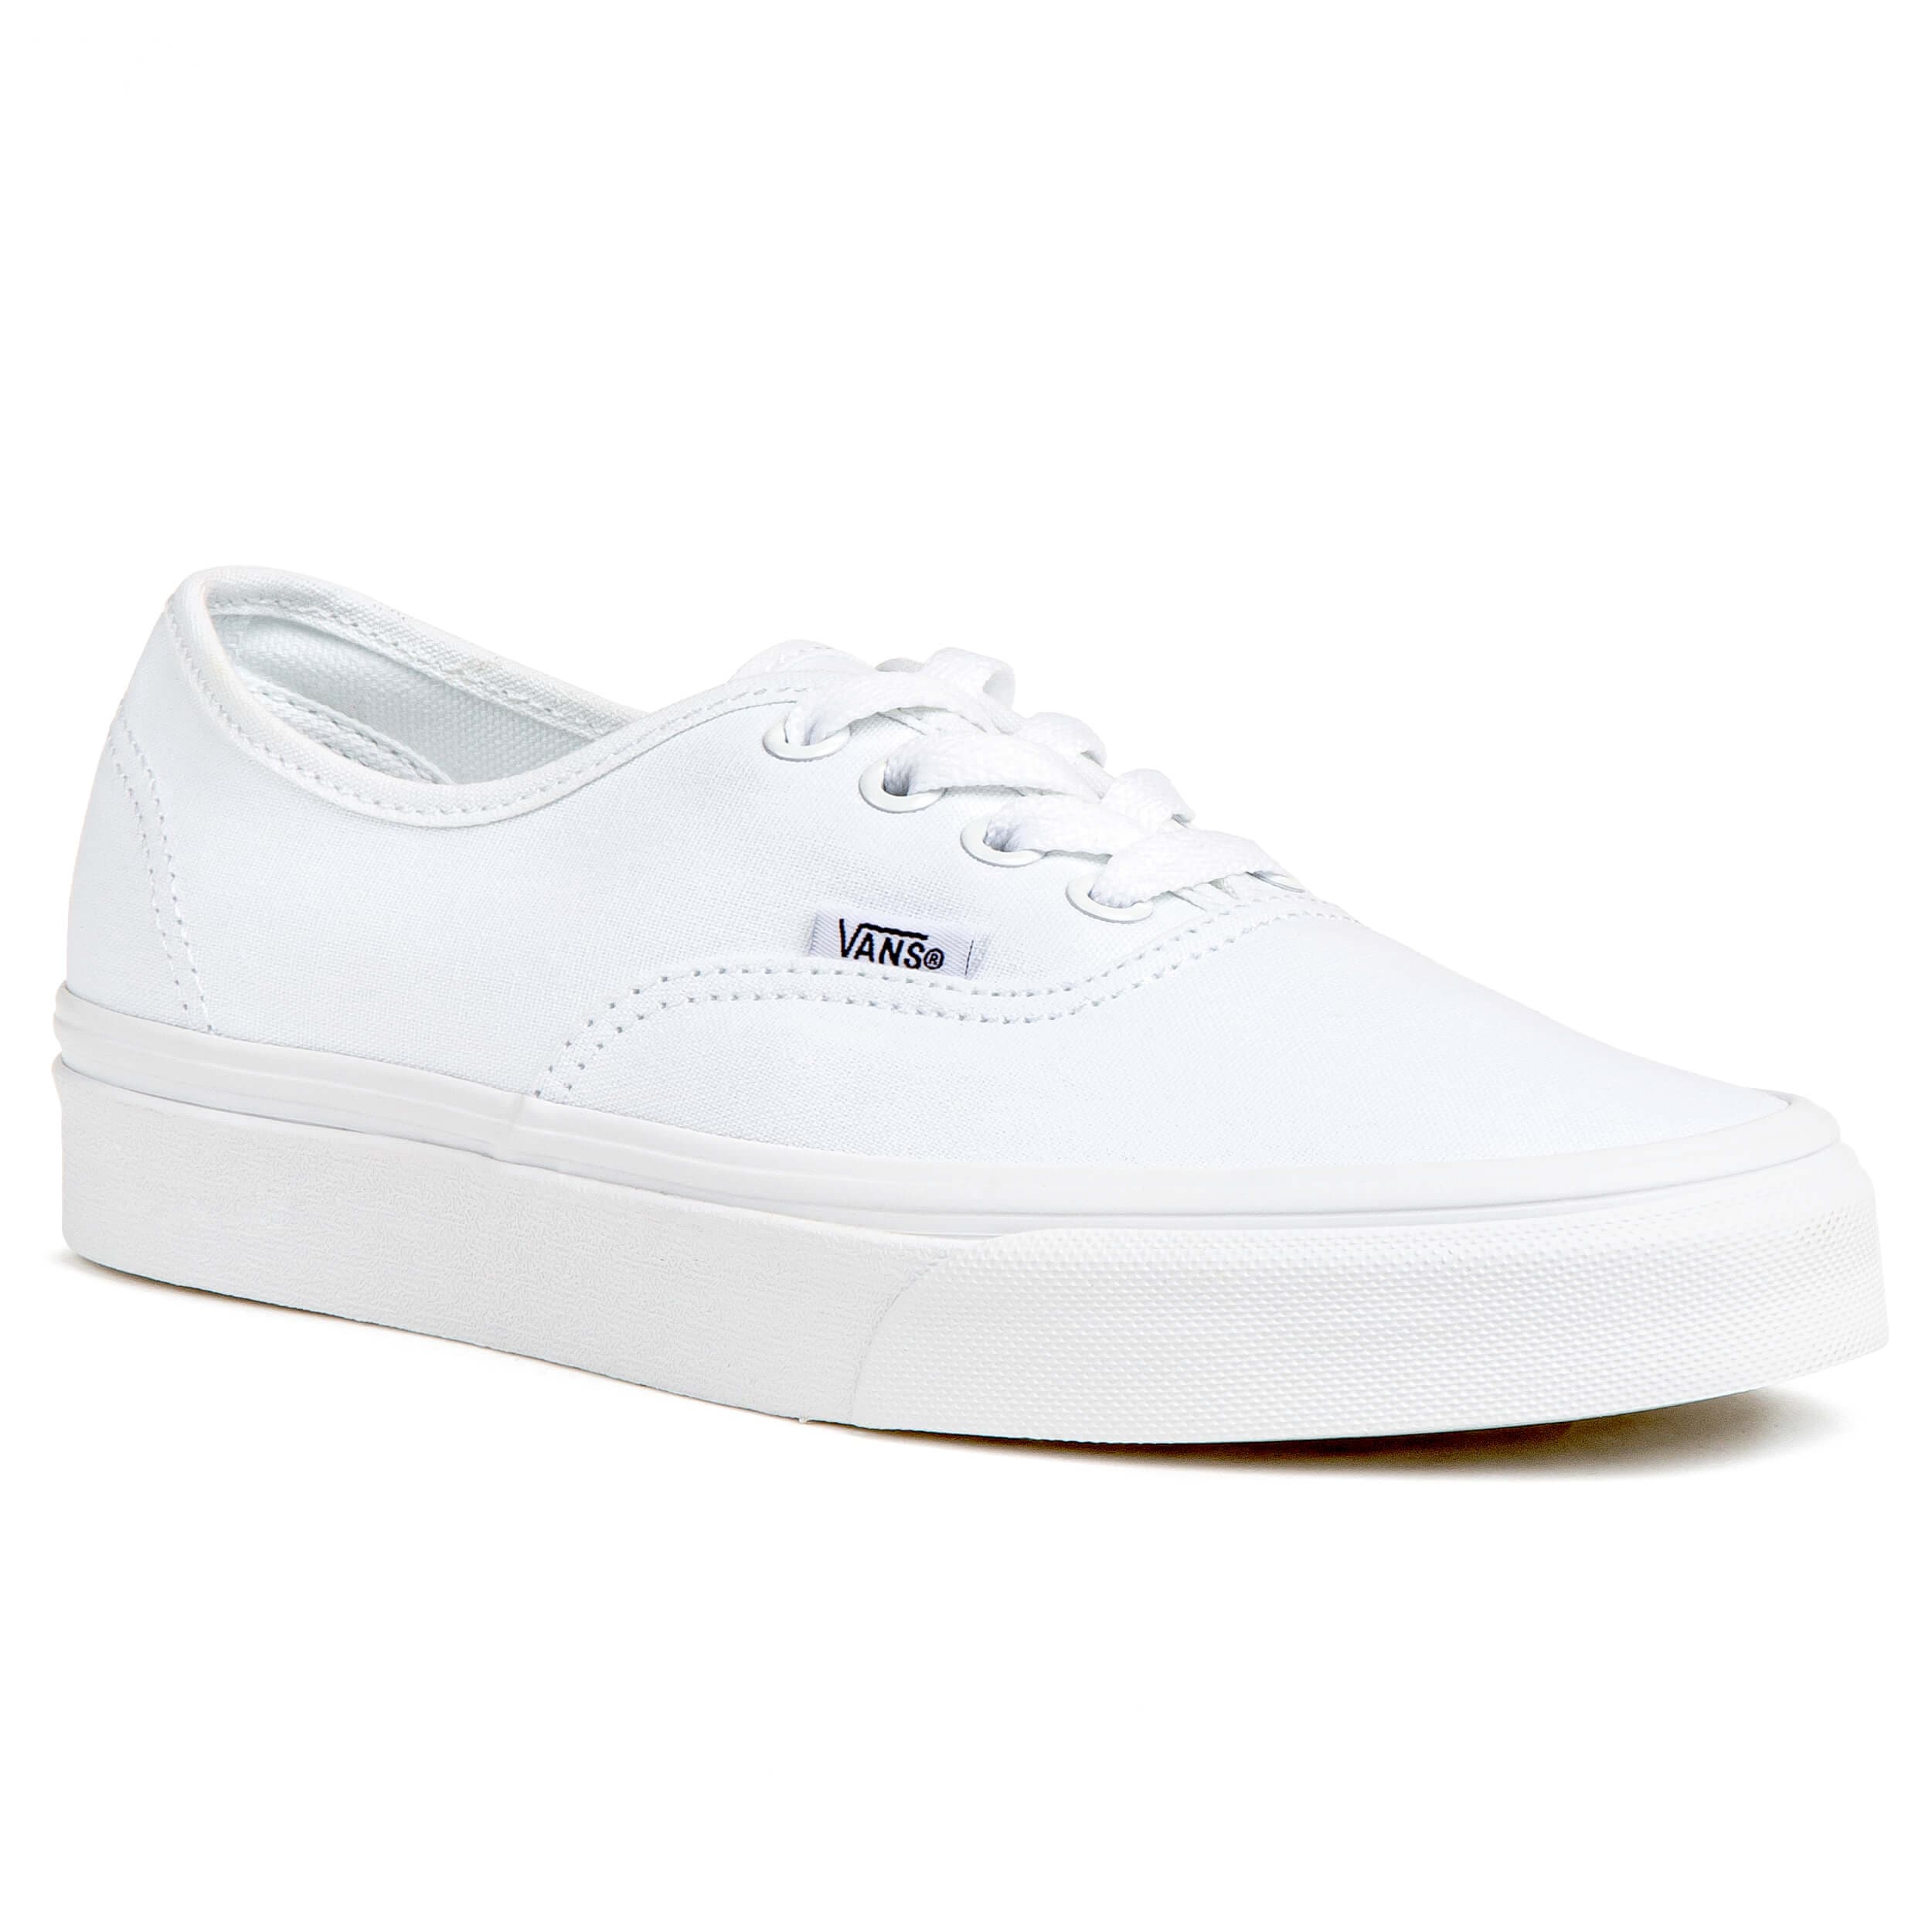 Unisex Authentic Sneaker - White